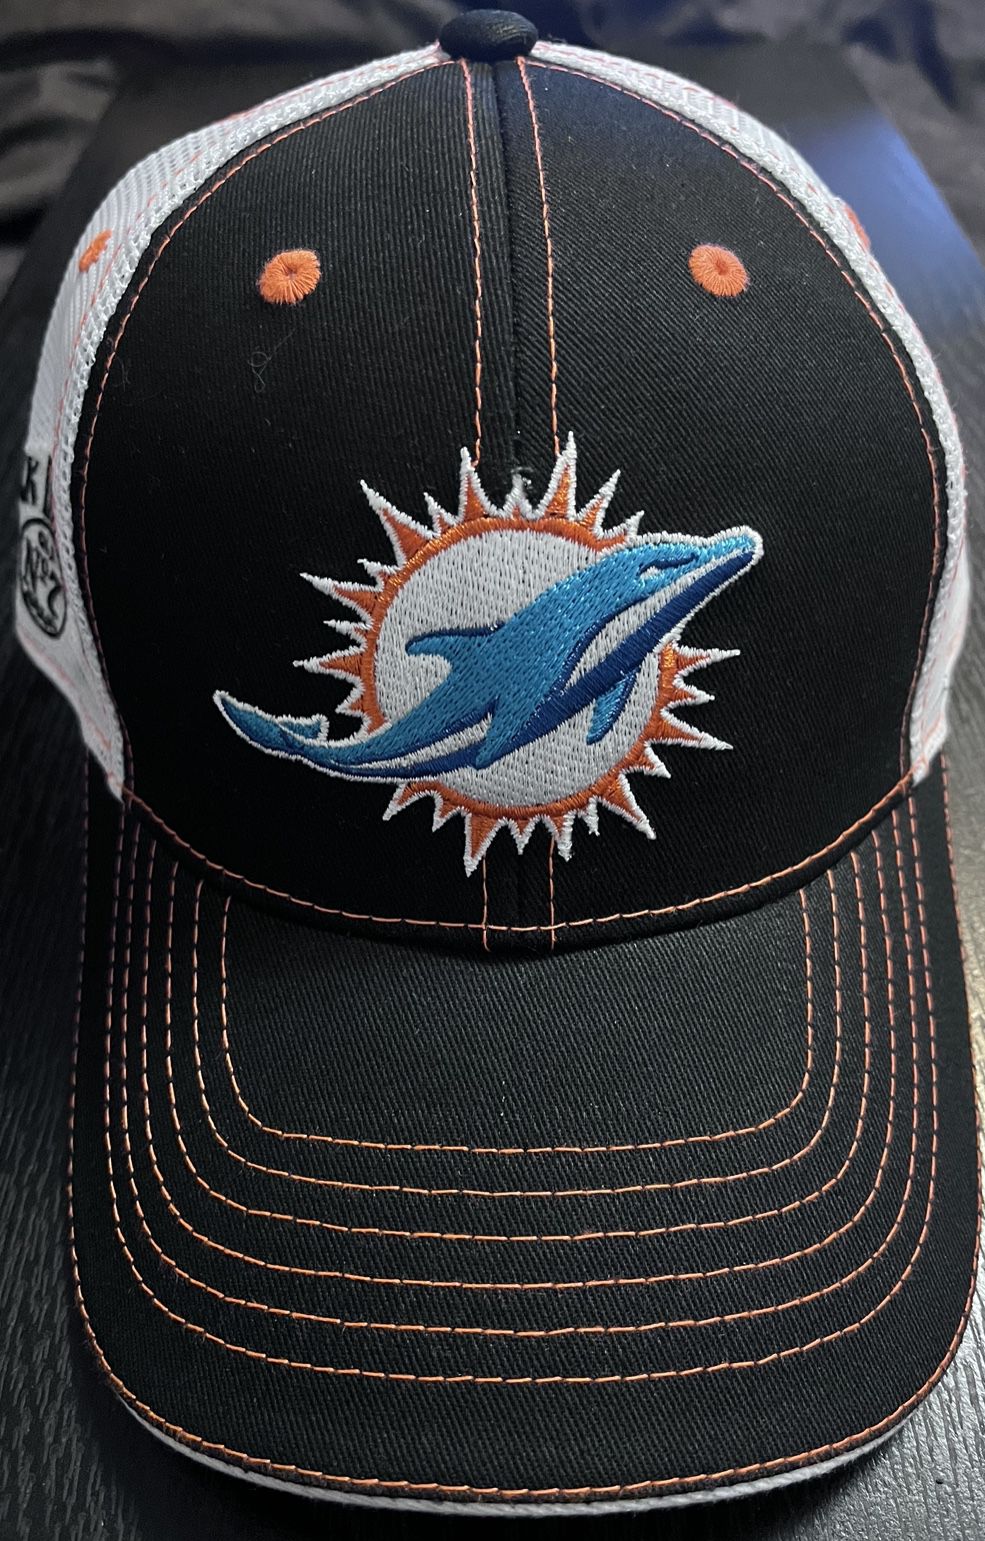 Miami Dolphins Adjustable Cap for Sale in Miami, FL - OfferUp